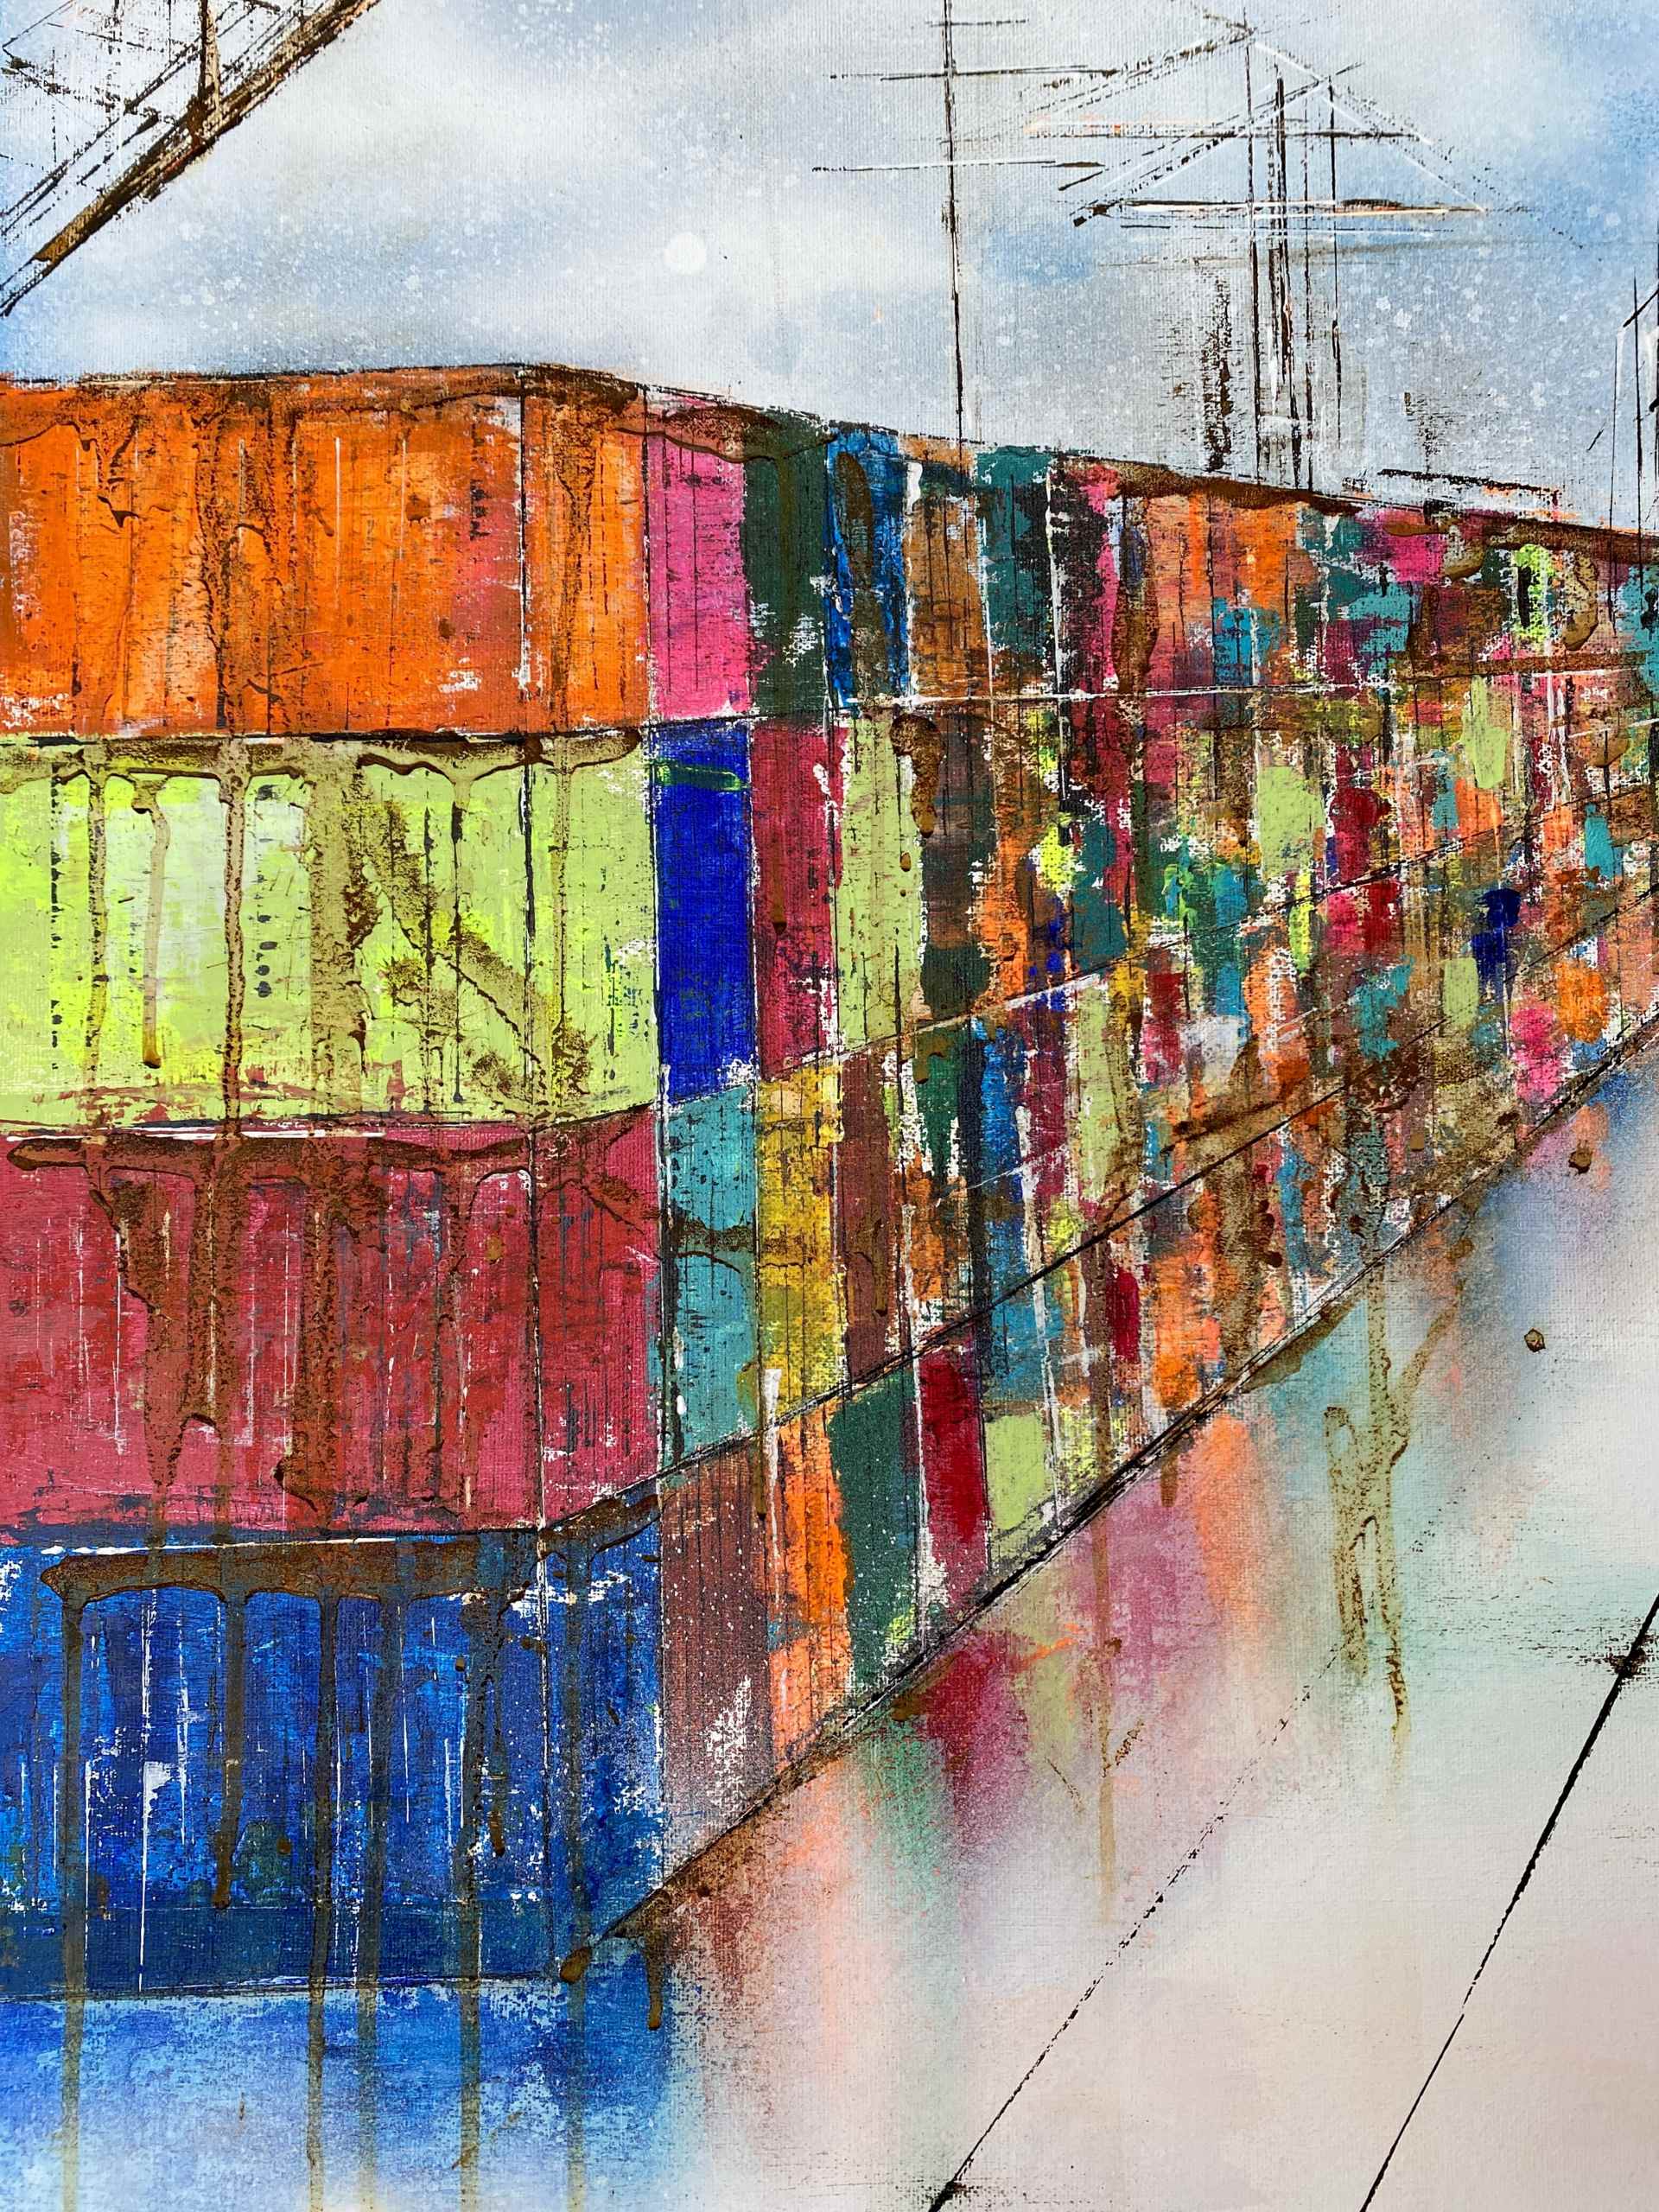 Detail of artwork "Dock No 7" by Nina Groth